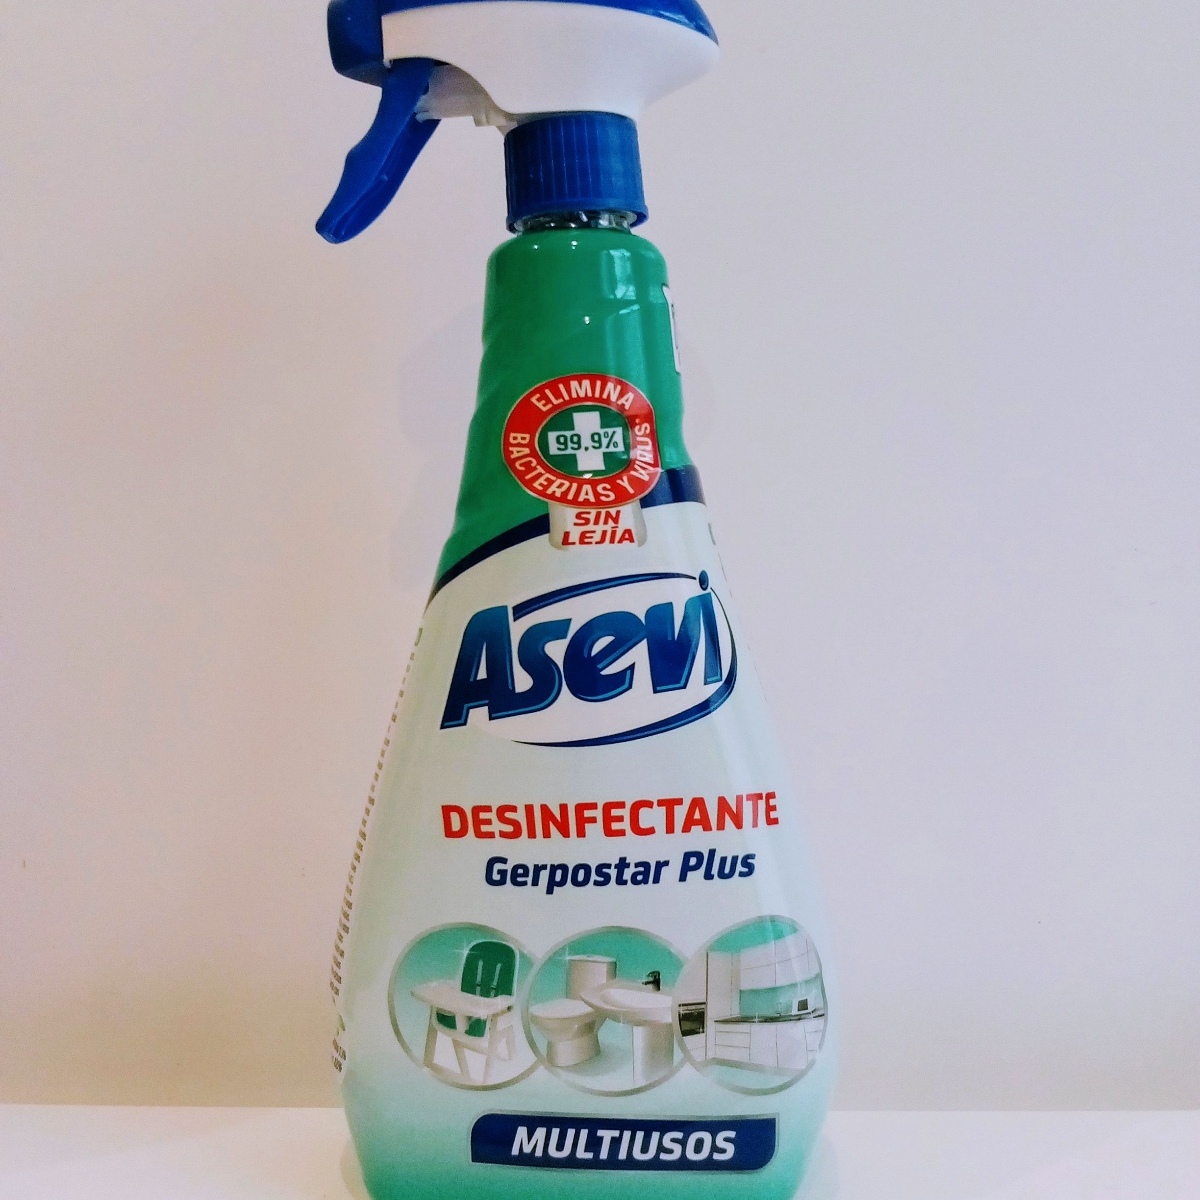 Asevi Desinfectante Reviews | abillion